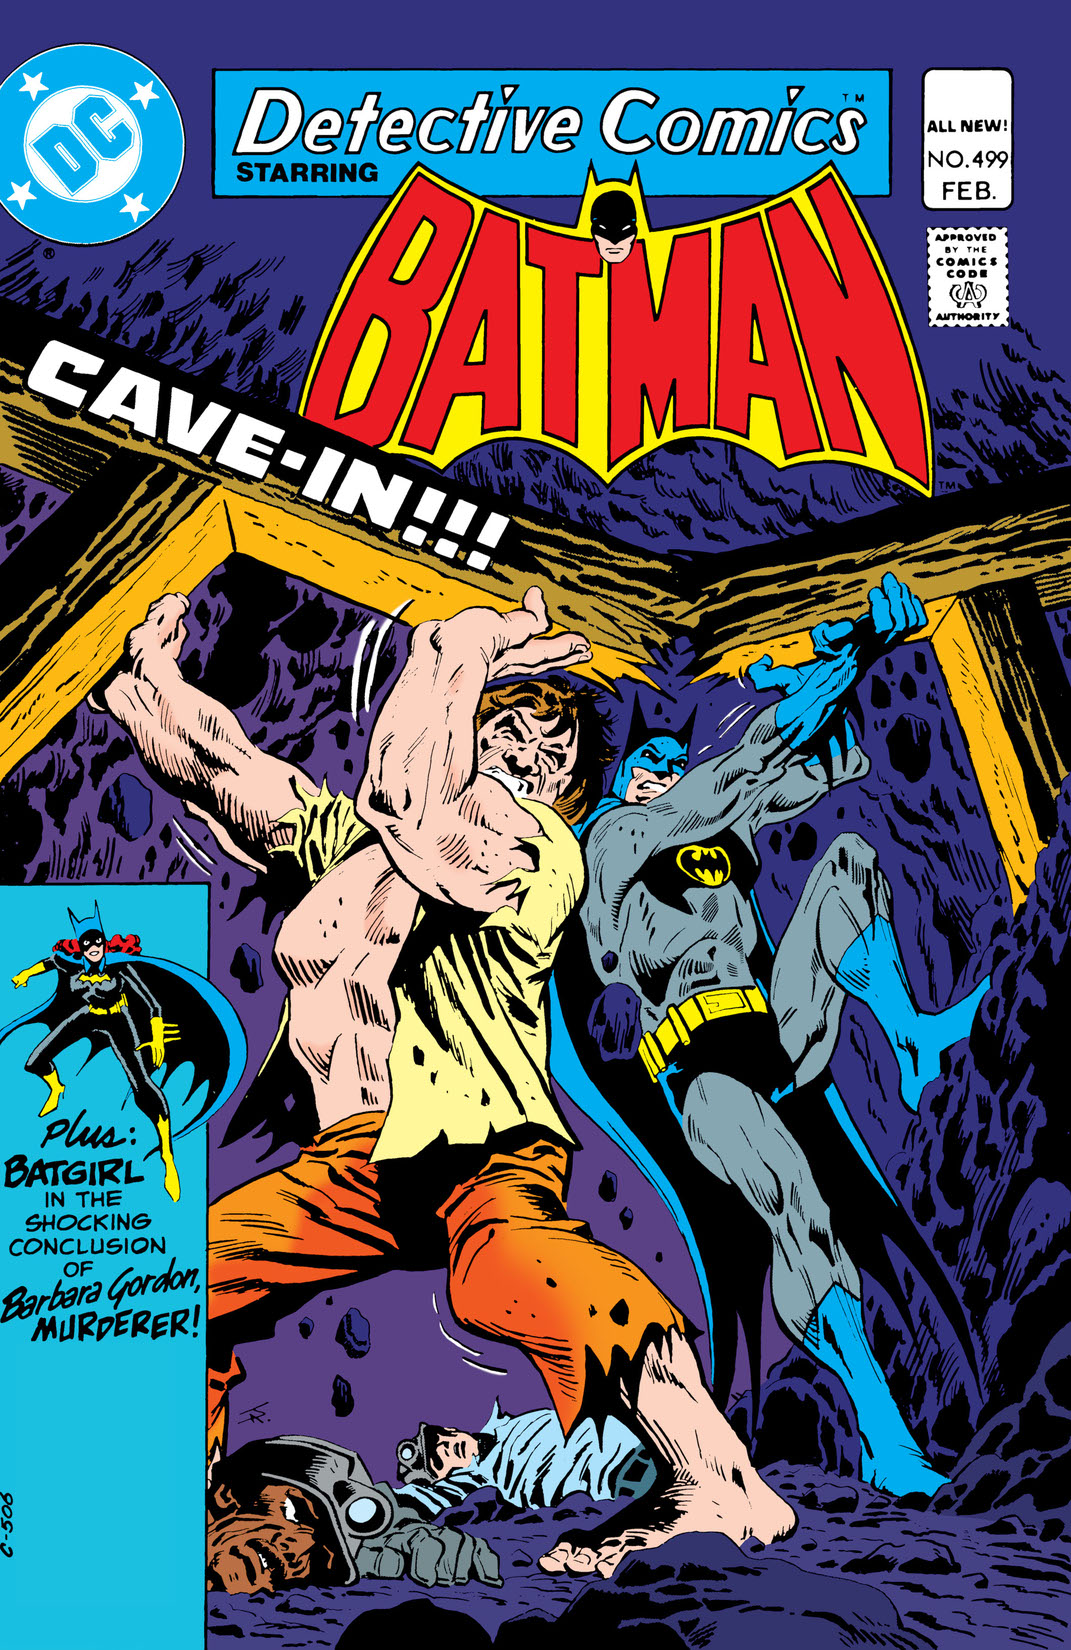 Detective Comics (1937-) #499 preview images